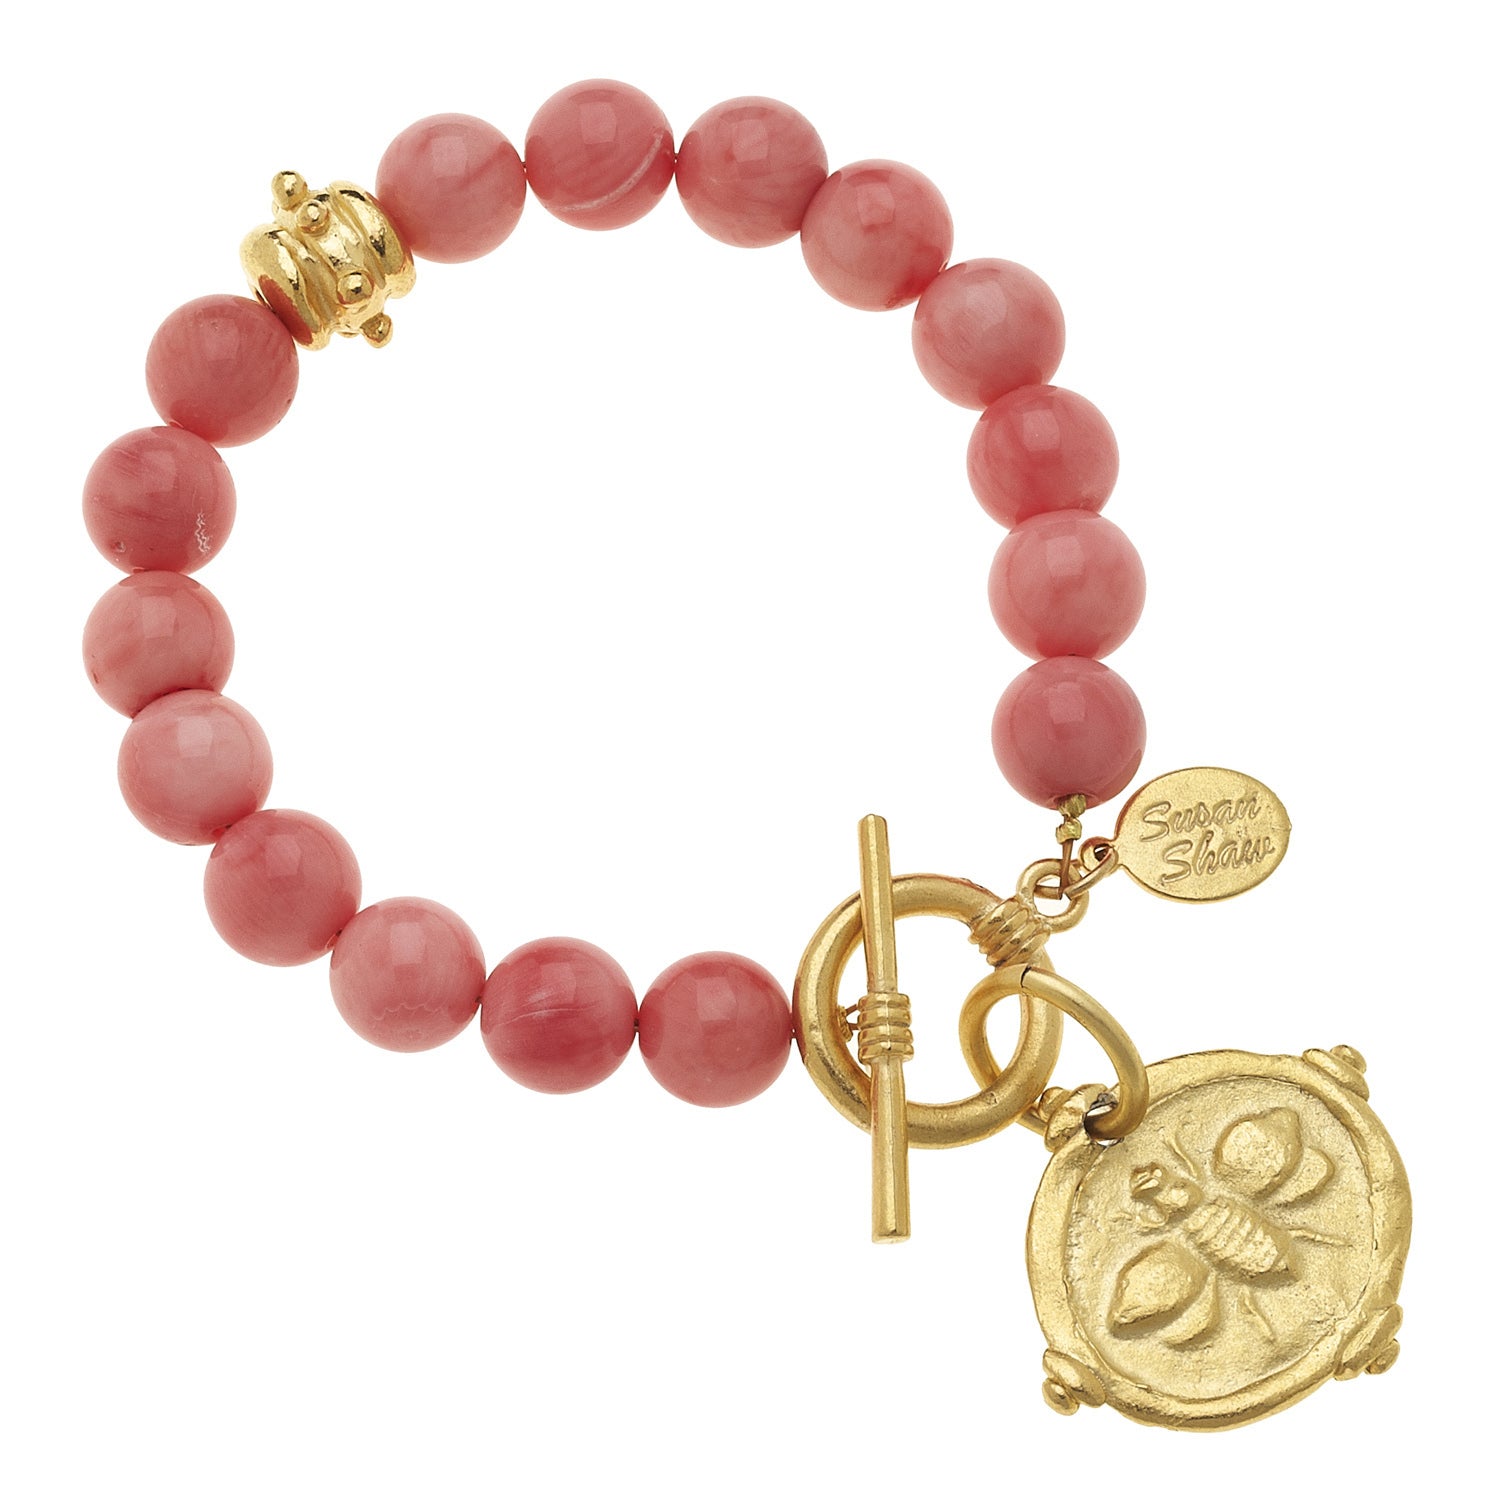 Susan Shaw Handcast Gold Bee Intaglio on Pink Coral Bracelet